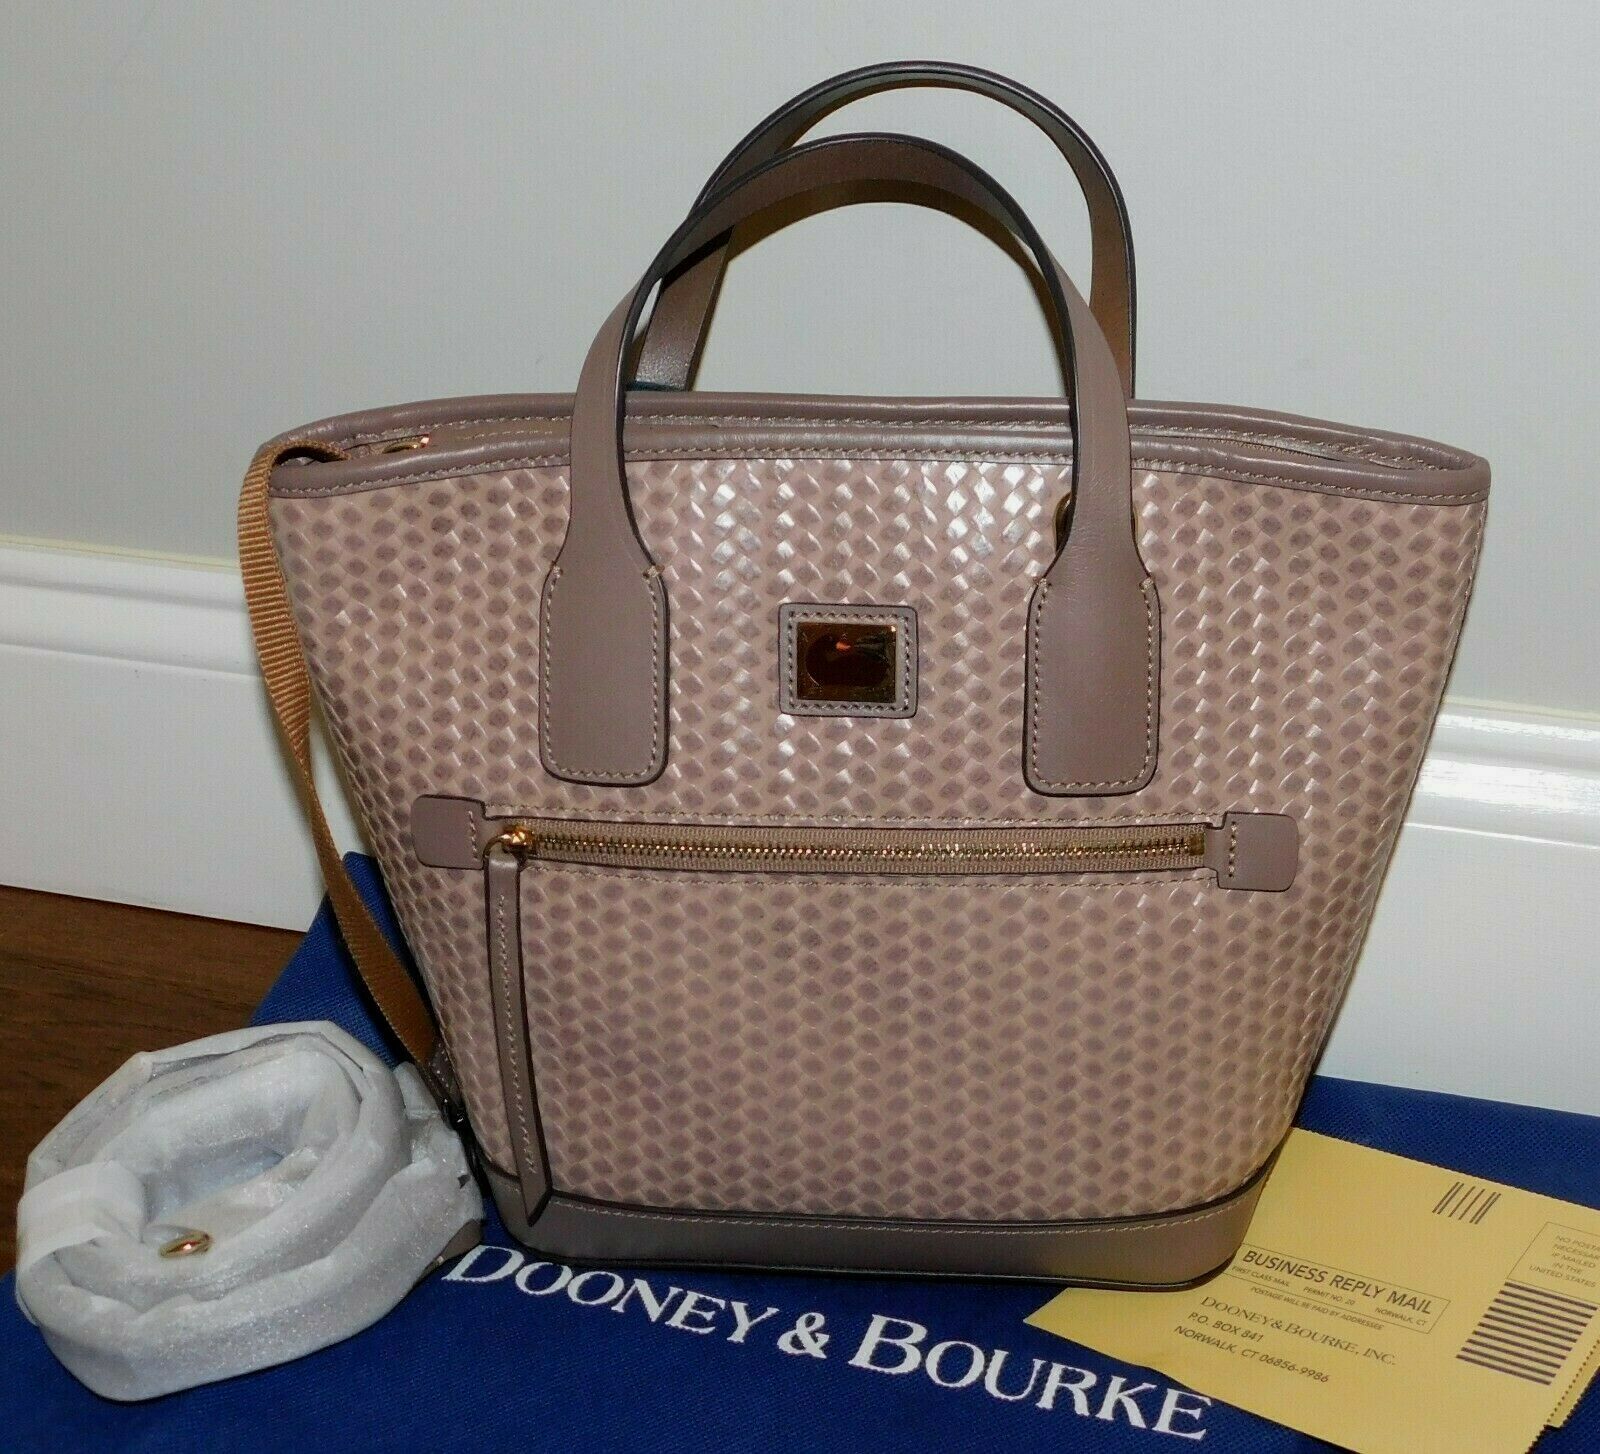 D&B Camden Saffiano Satchel  Canvas leather bag, Patent leather handbags,  Dooney bourke handbags